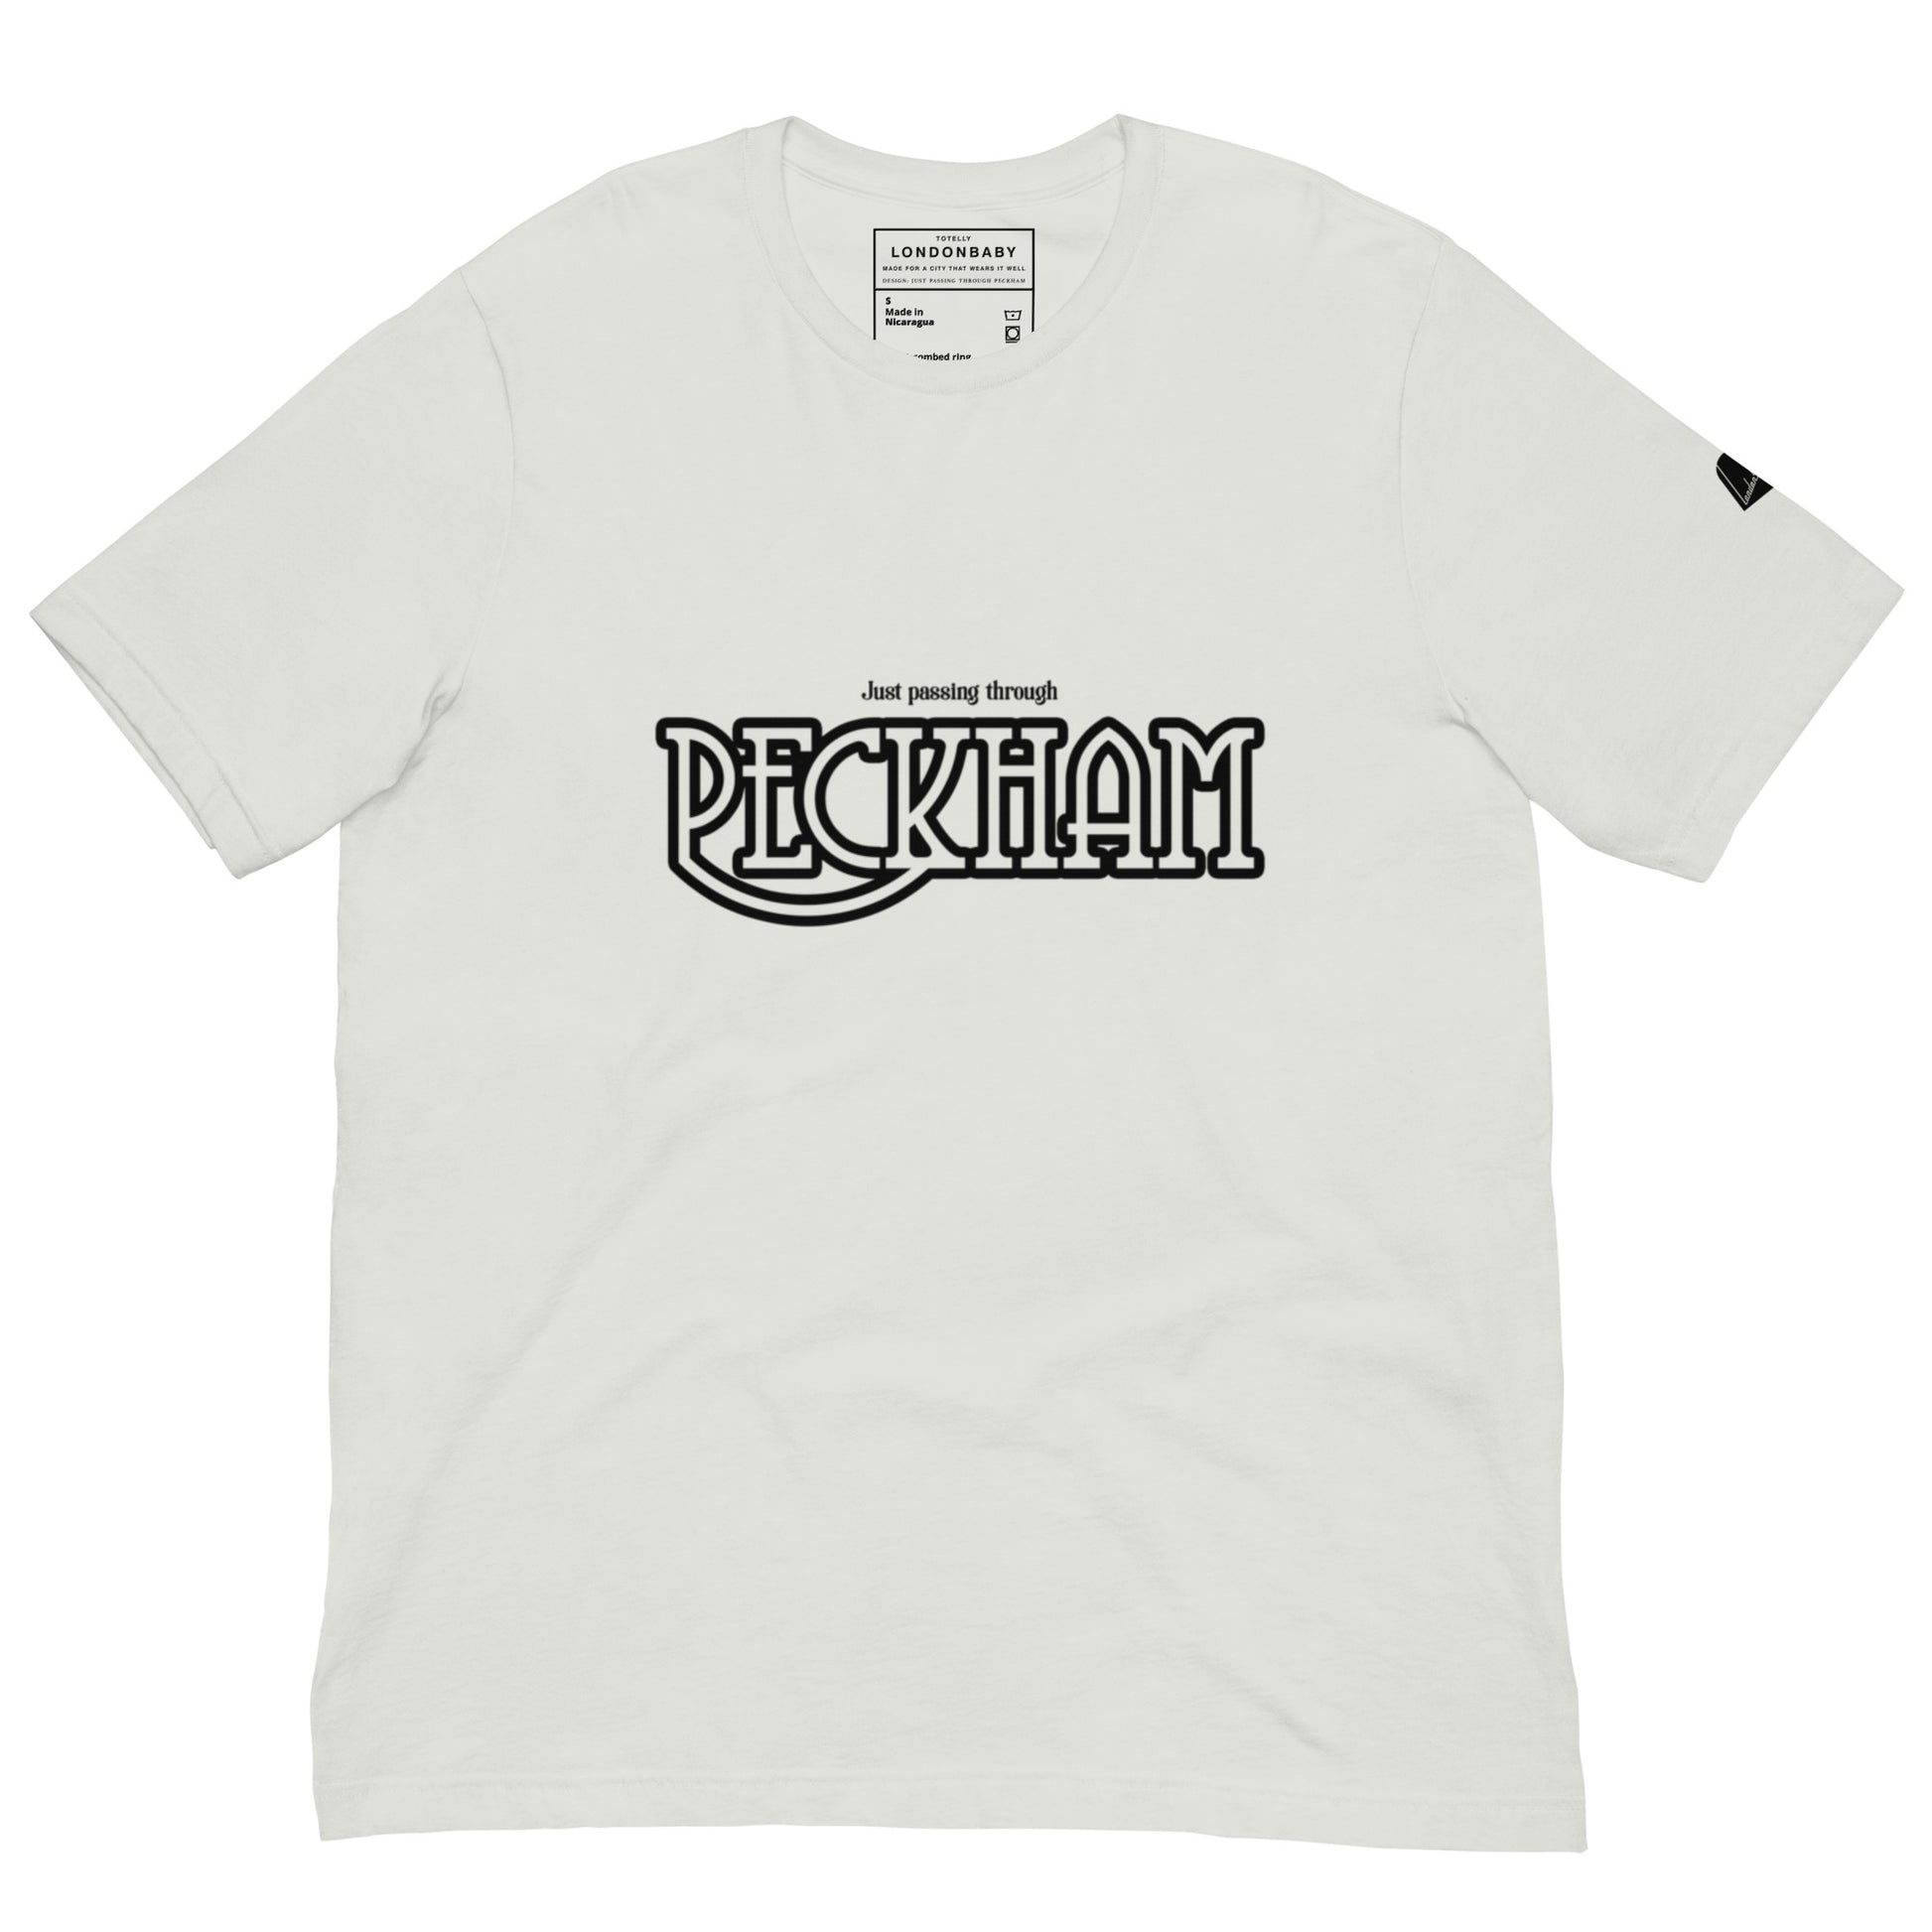 LondonBaby Just Passing Through Peckham vintage-style 100% cotton T-shirt - Front